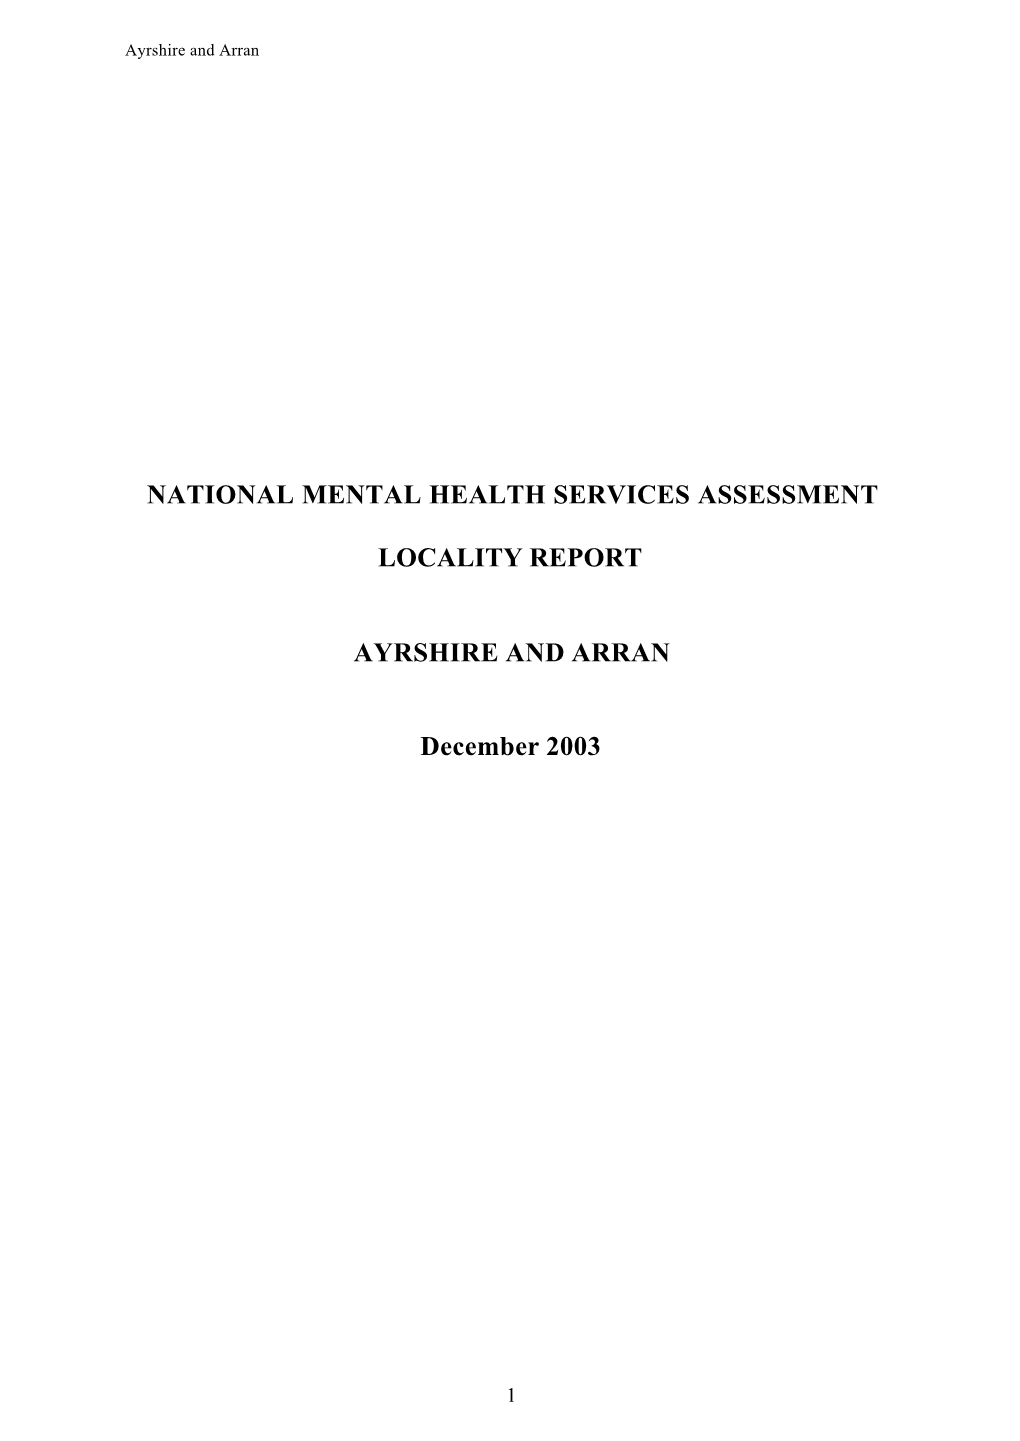 National Mental Health Services Assessment